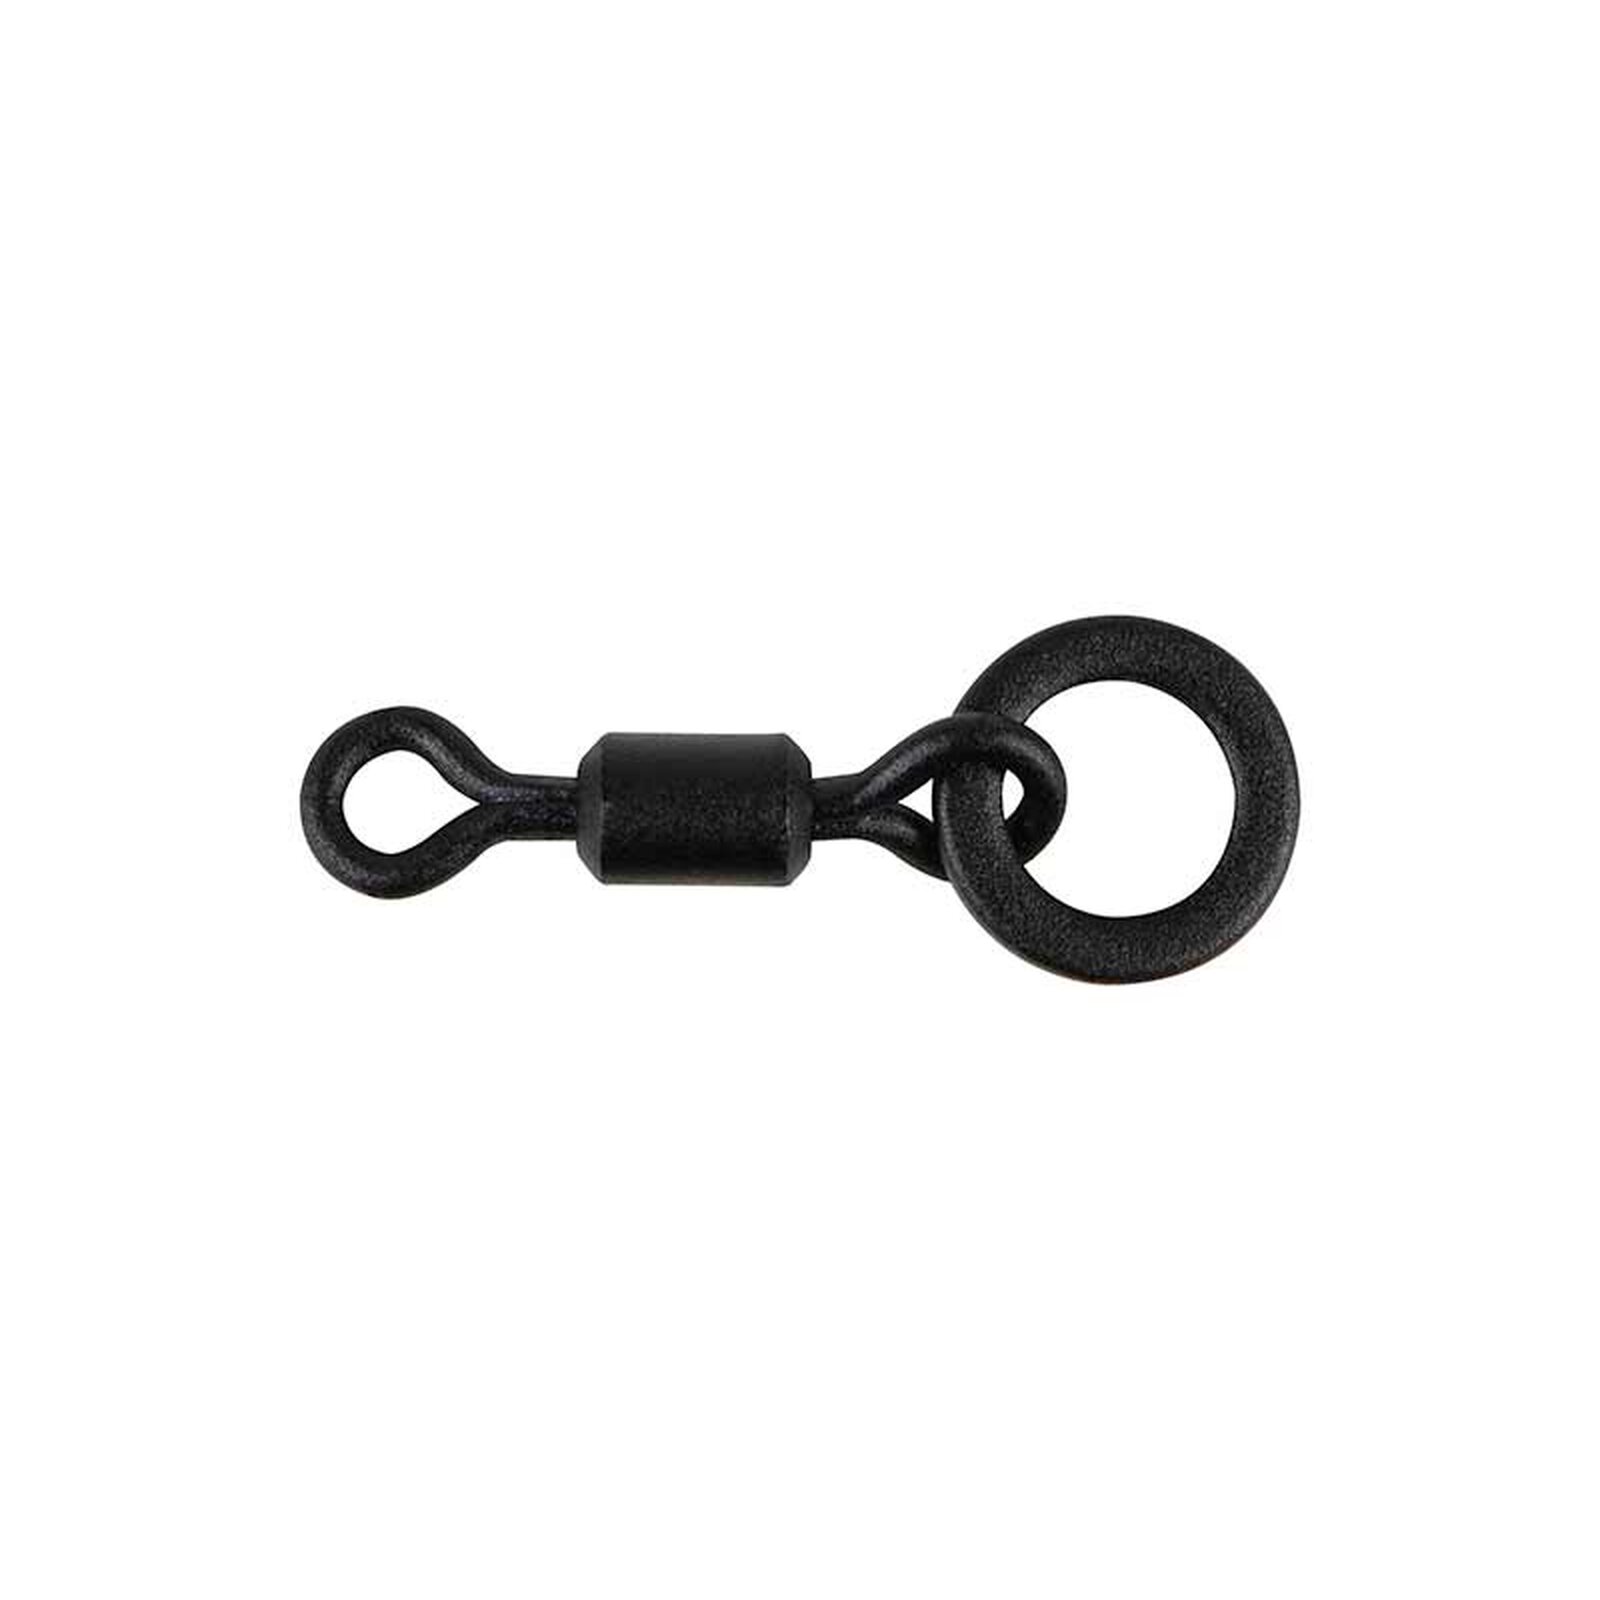 FOX EDGES&trade; Essentials Mini Hook Ring Swivels